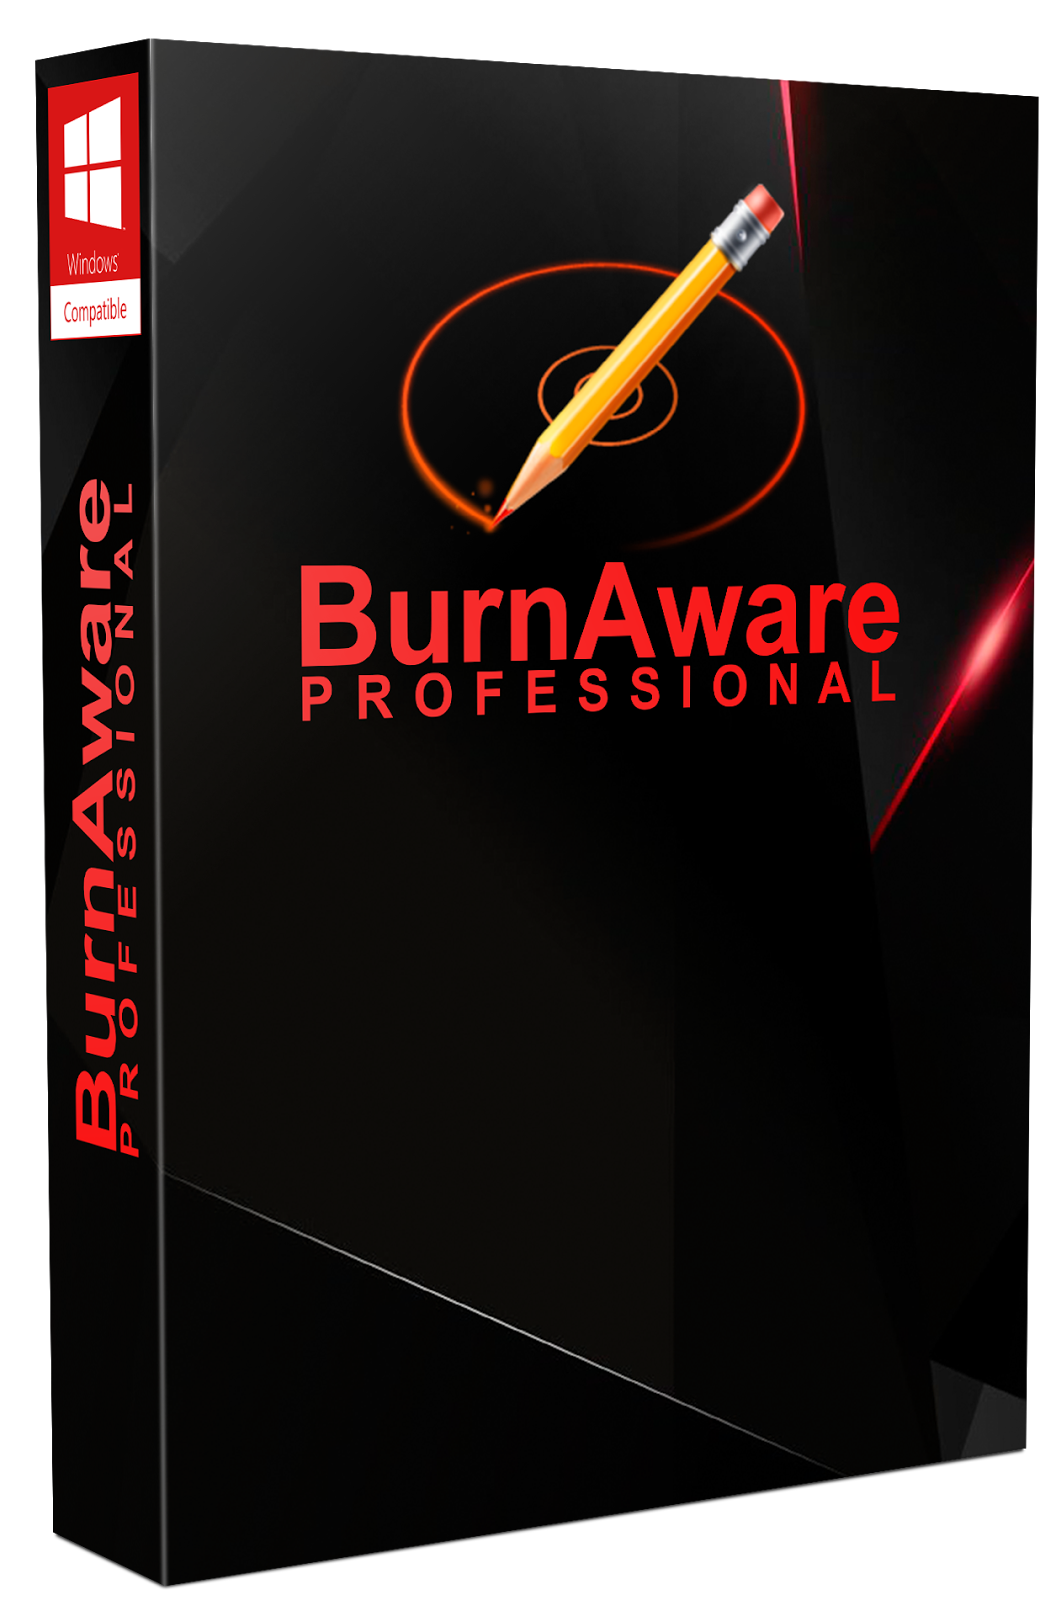 BurnAware Pro + Free 17.0 download the last version for windows